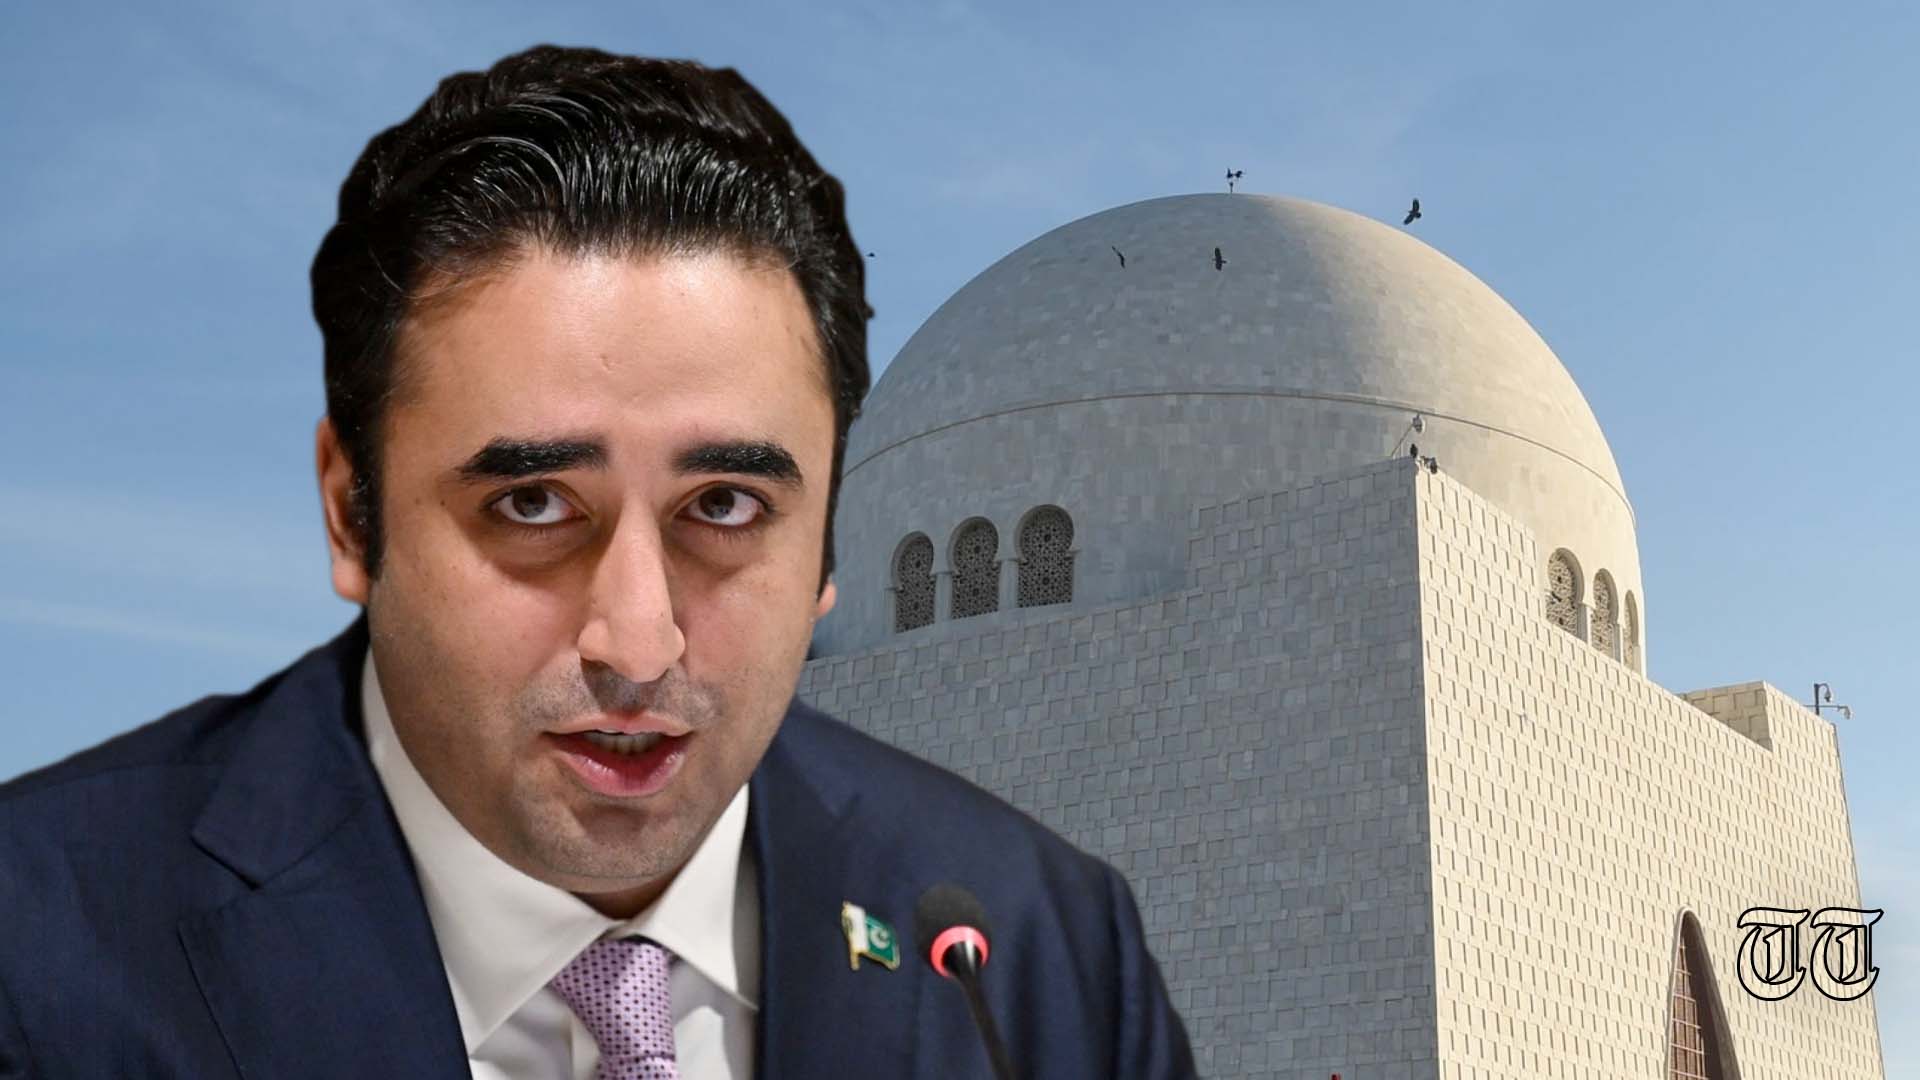 A combination file photo is shown of foreign minister Bilawal Bhutto-Zardari alongside the Jinnah Mausoleum in Karachi.